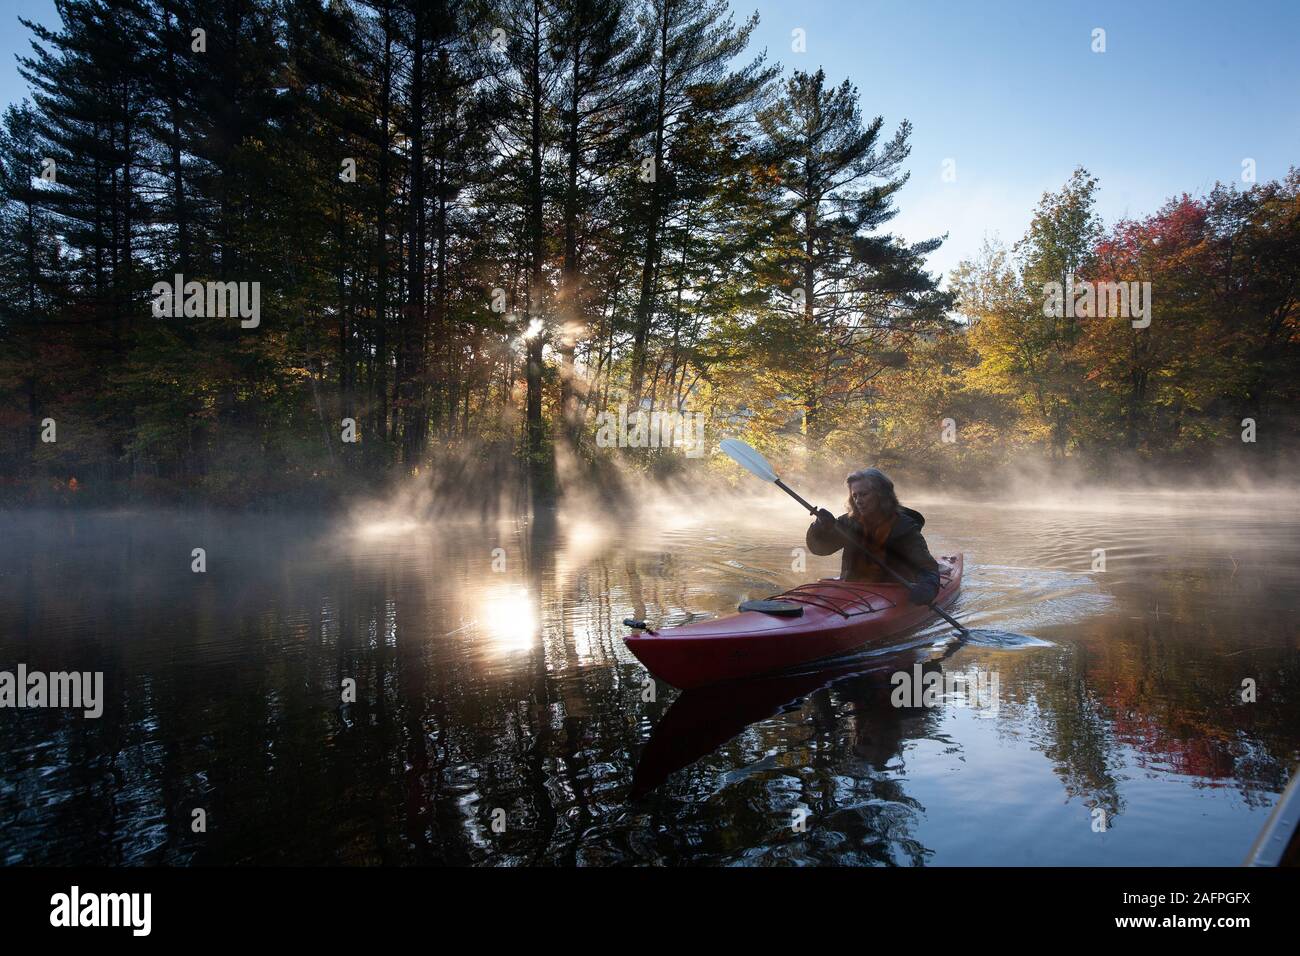 Solo paddling on a misty pond at sunrise. Stock Photo